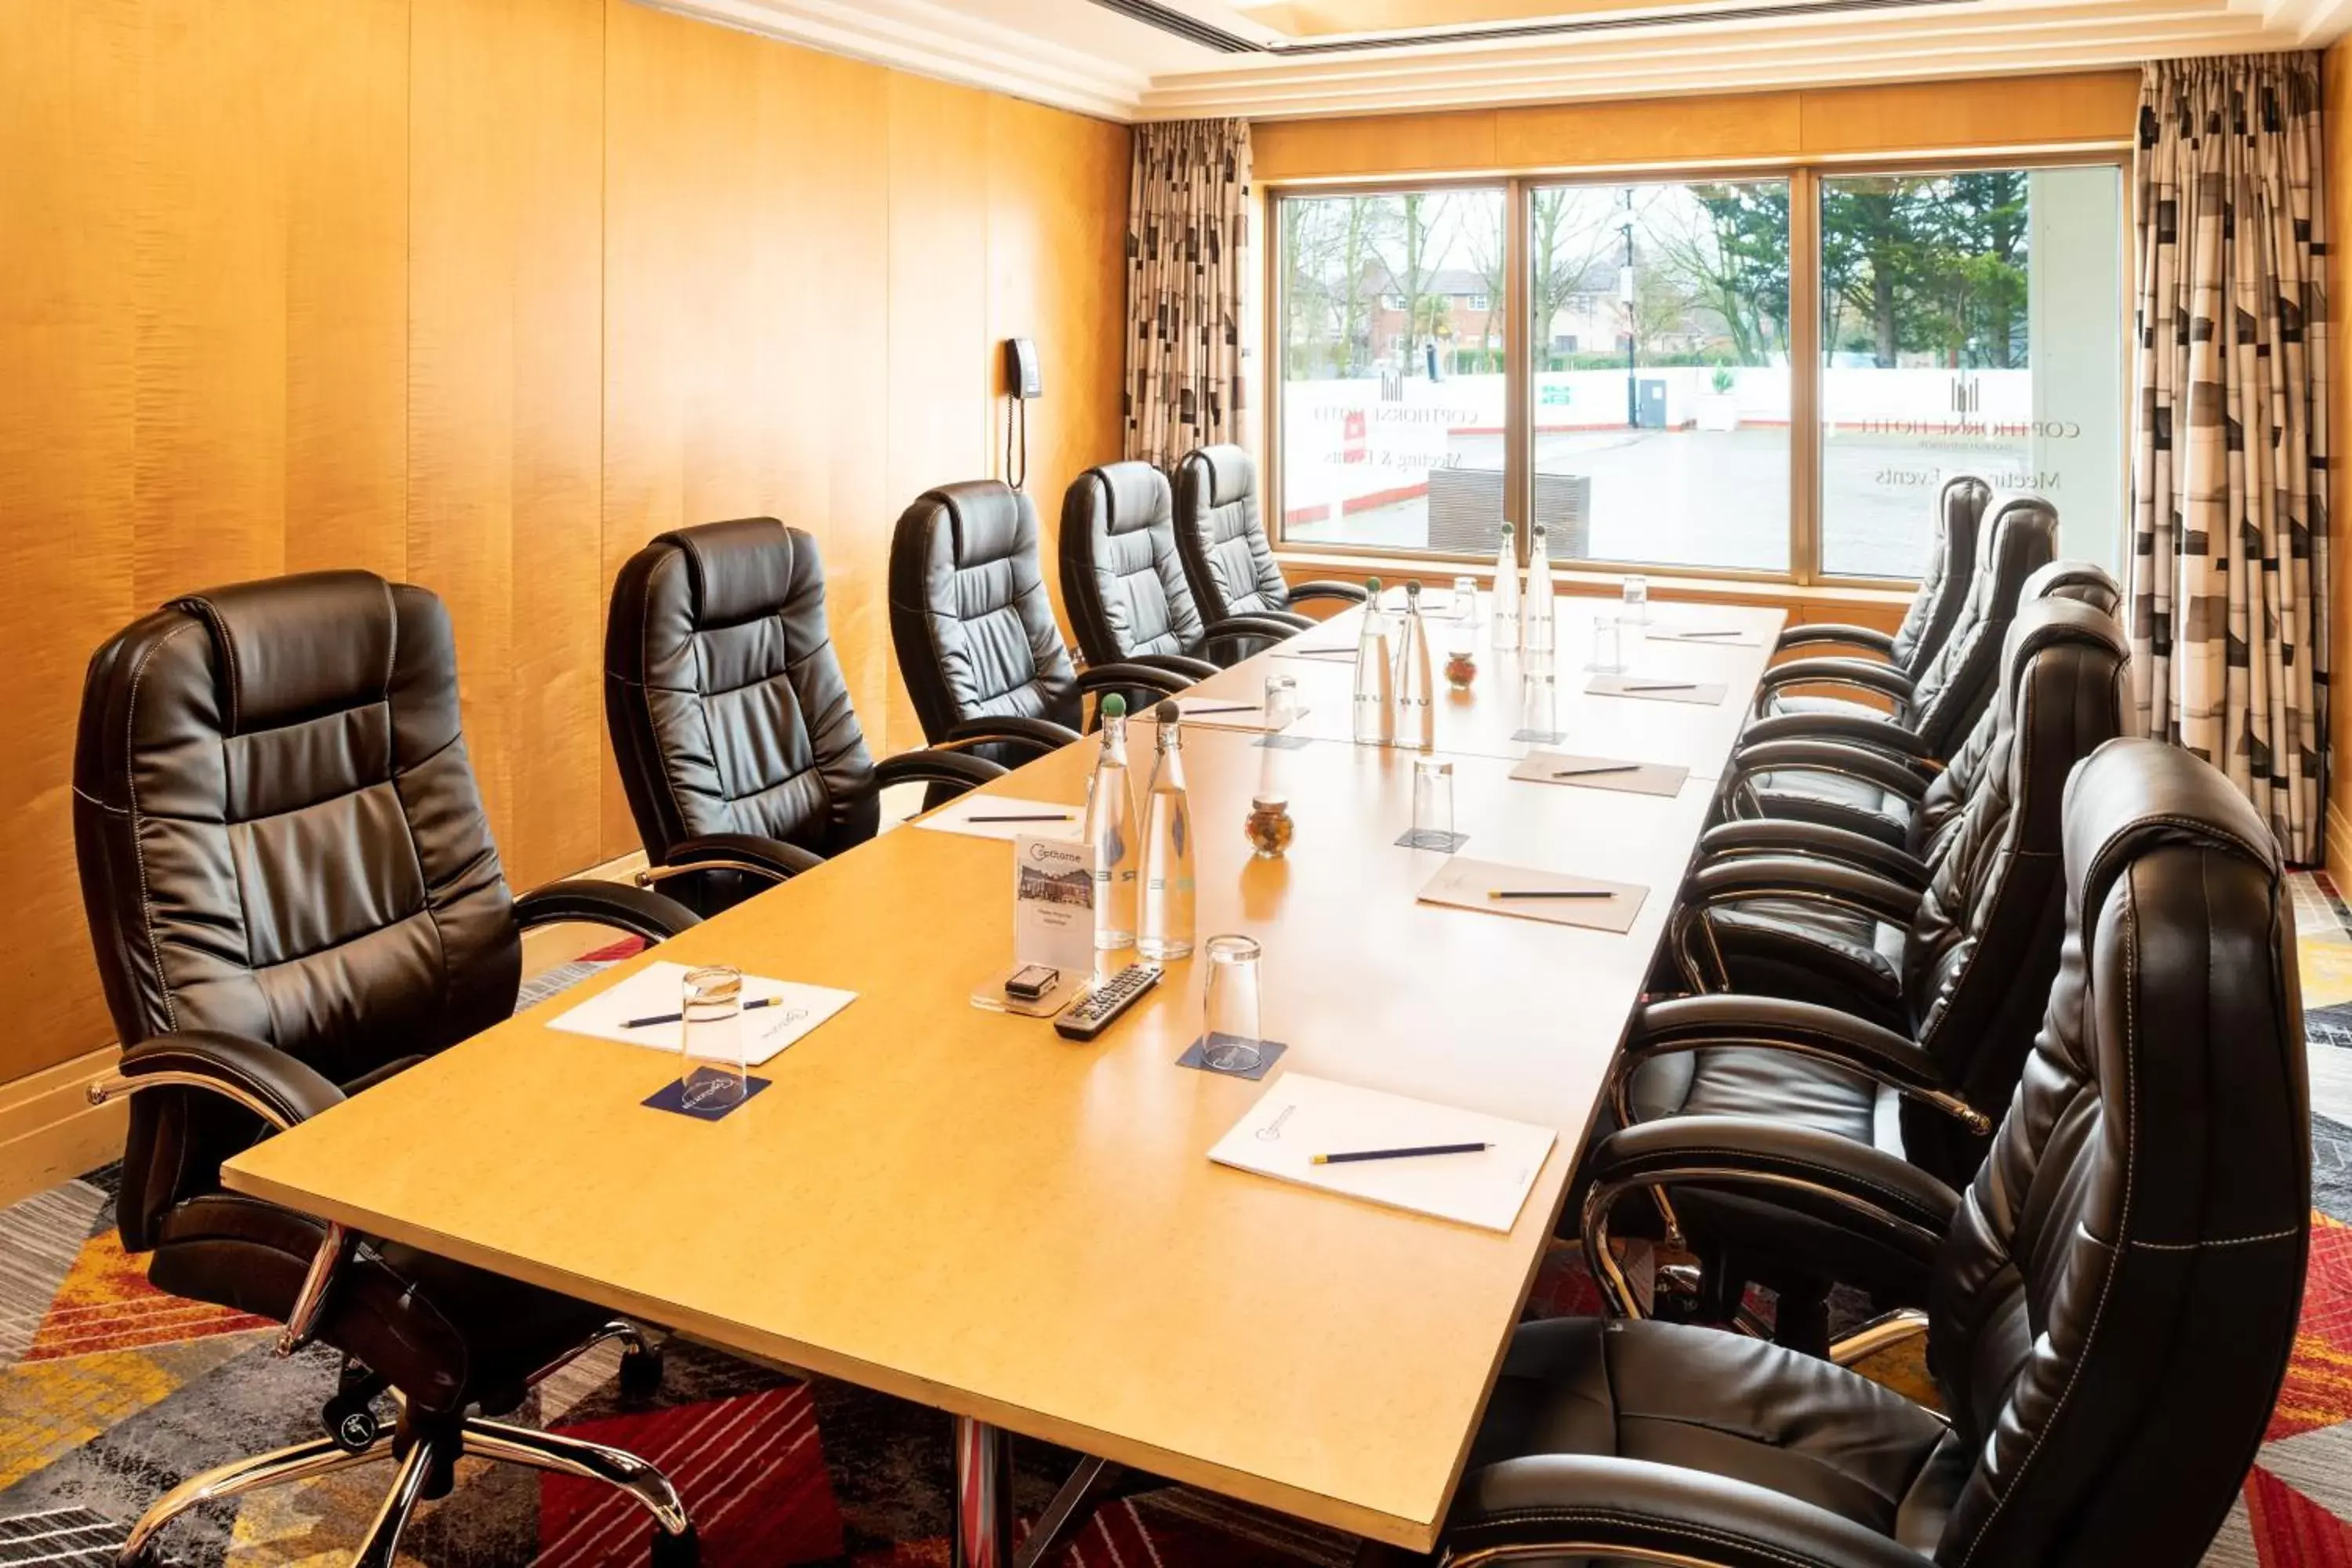 Meeting/conference room in Copthorne Hotel Slough Windsor